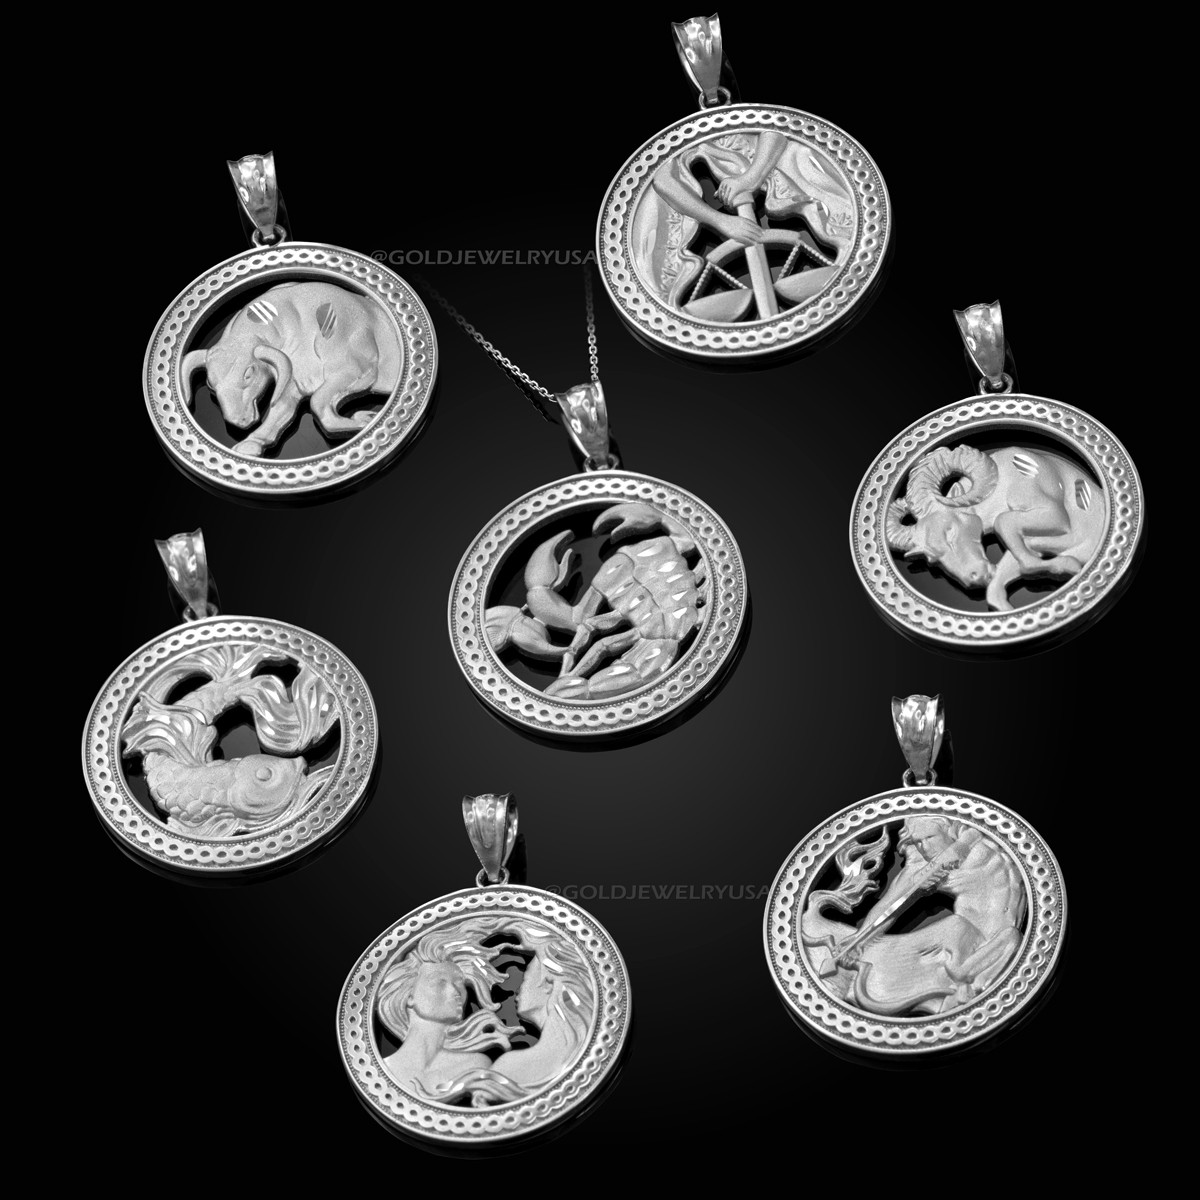 Astrology Jewelry Fine 10k White Gold Filigree-Style Rectangular Frame Cancer Zodiac Sign Pendant Necklace 